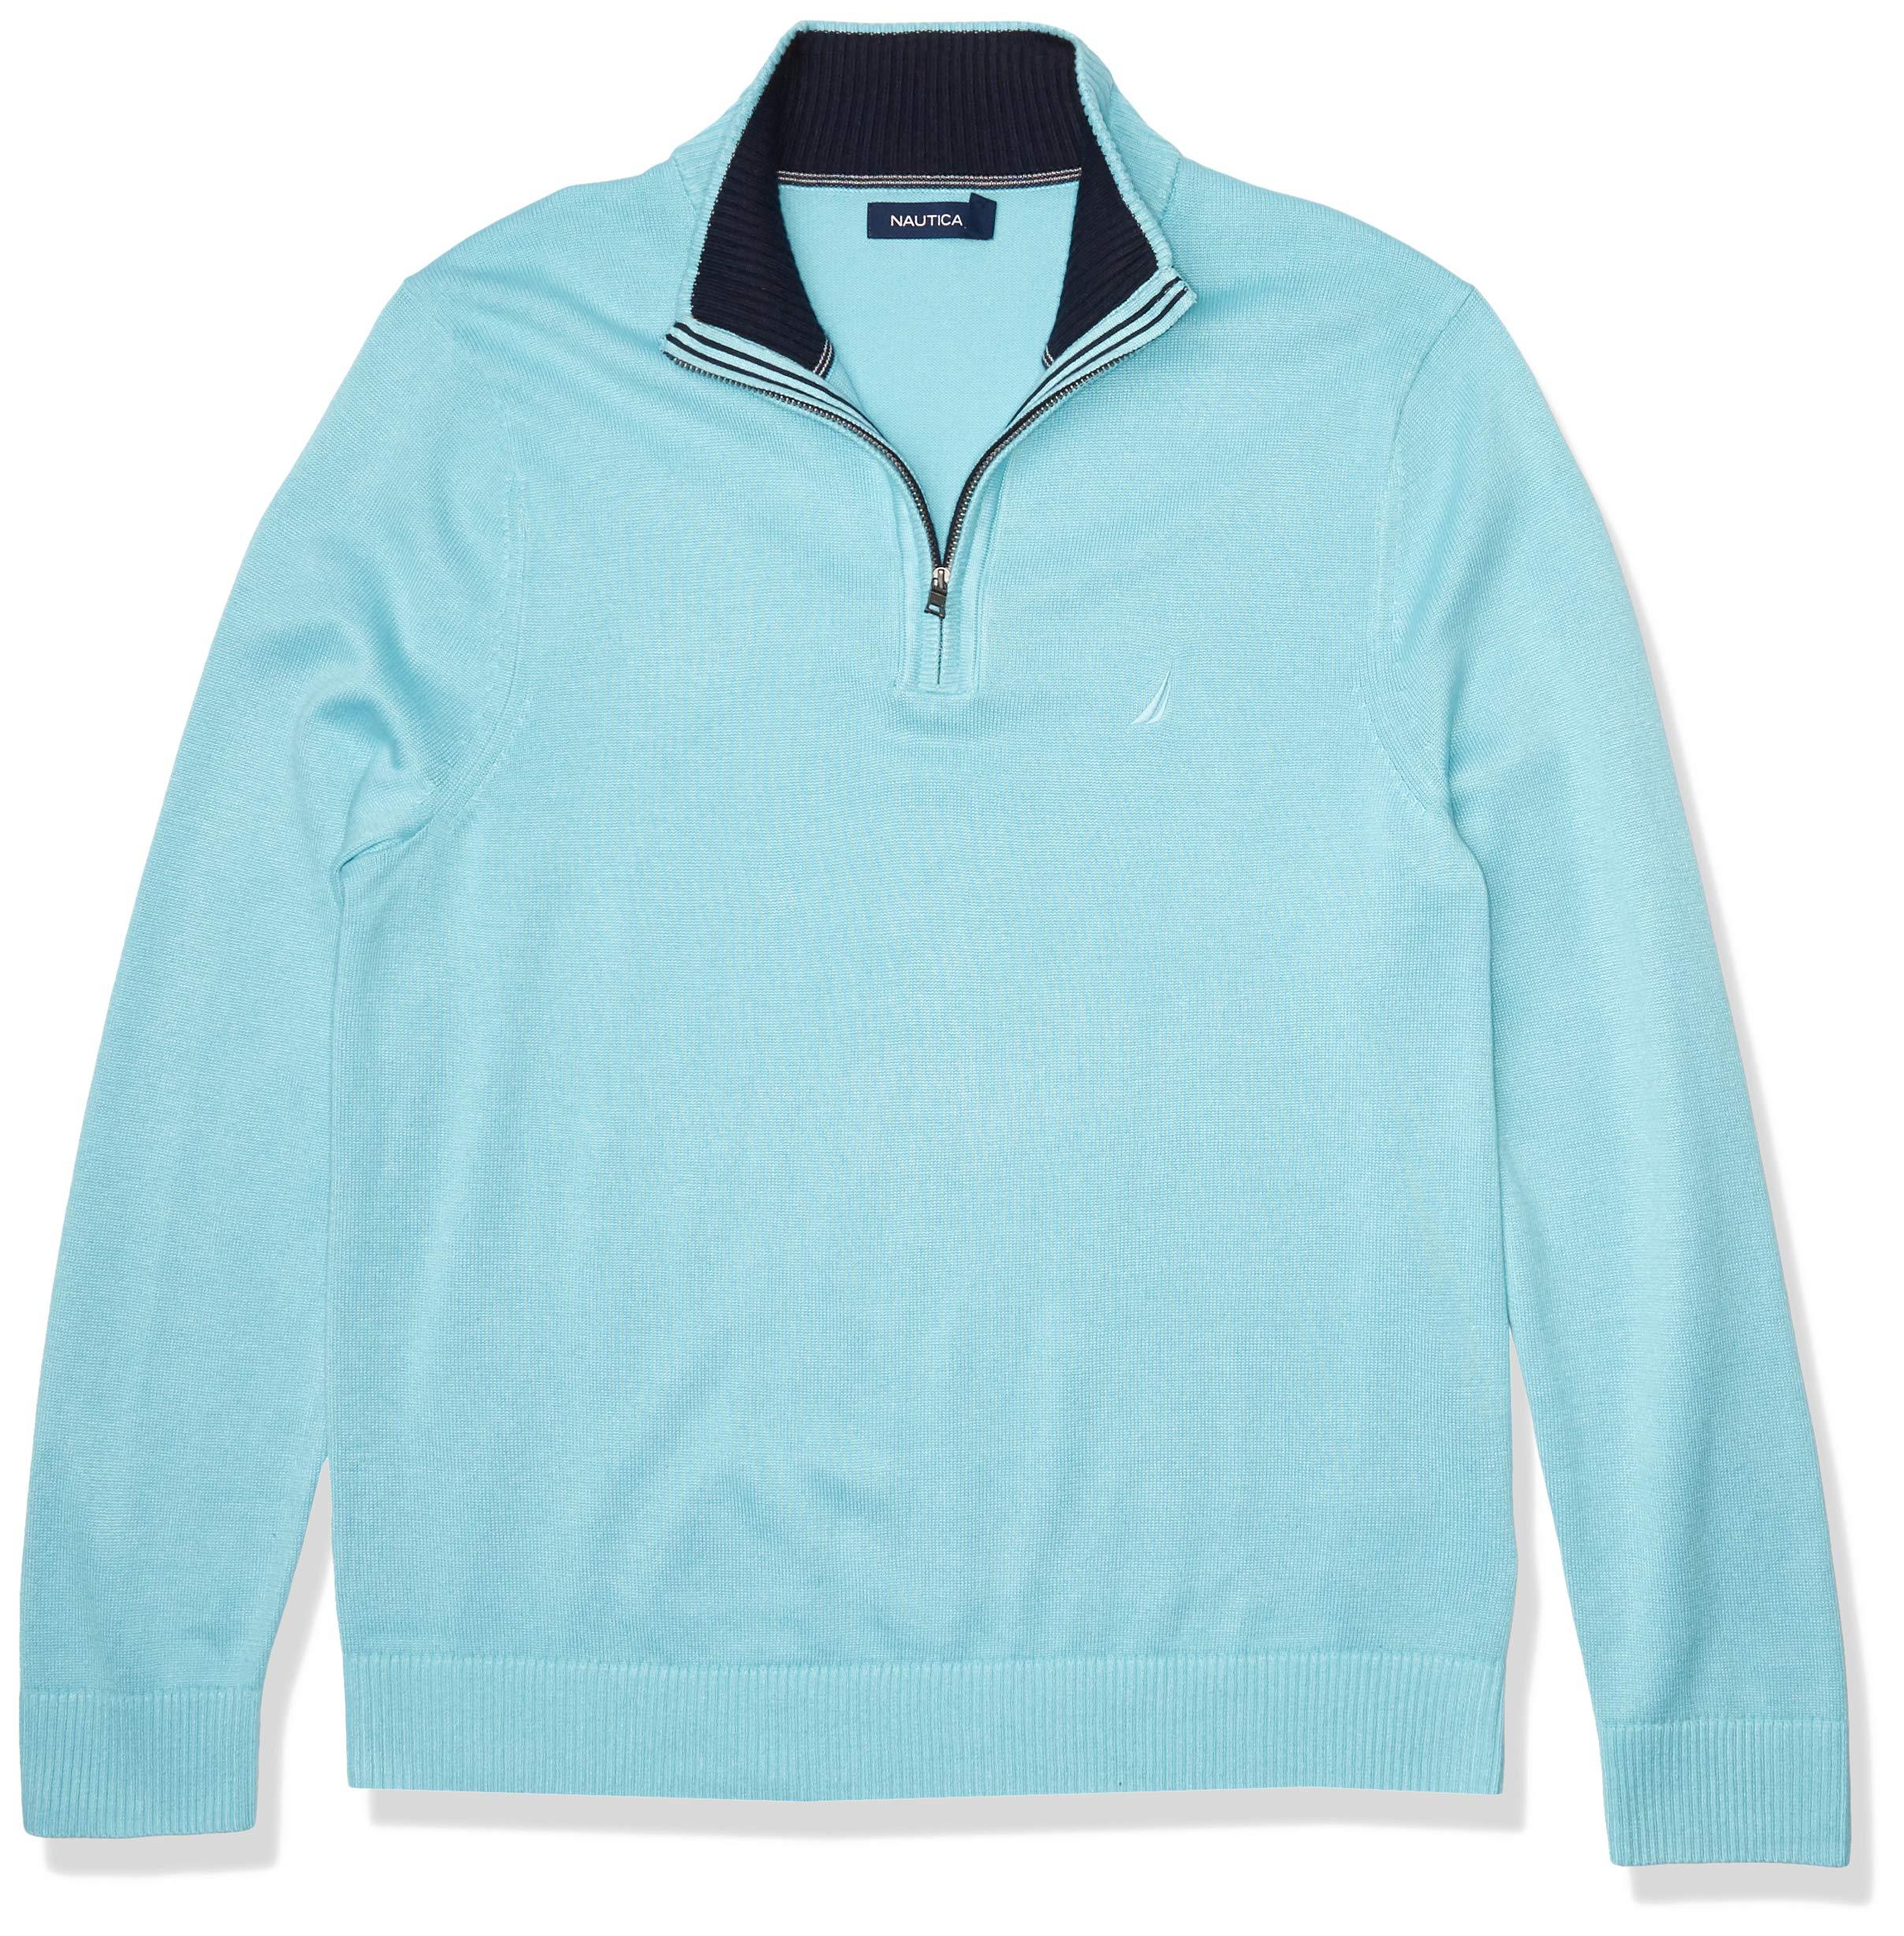 Nautica Quarter-zip Sweater in Blue for Men - Lyst